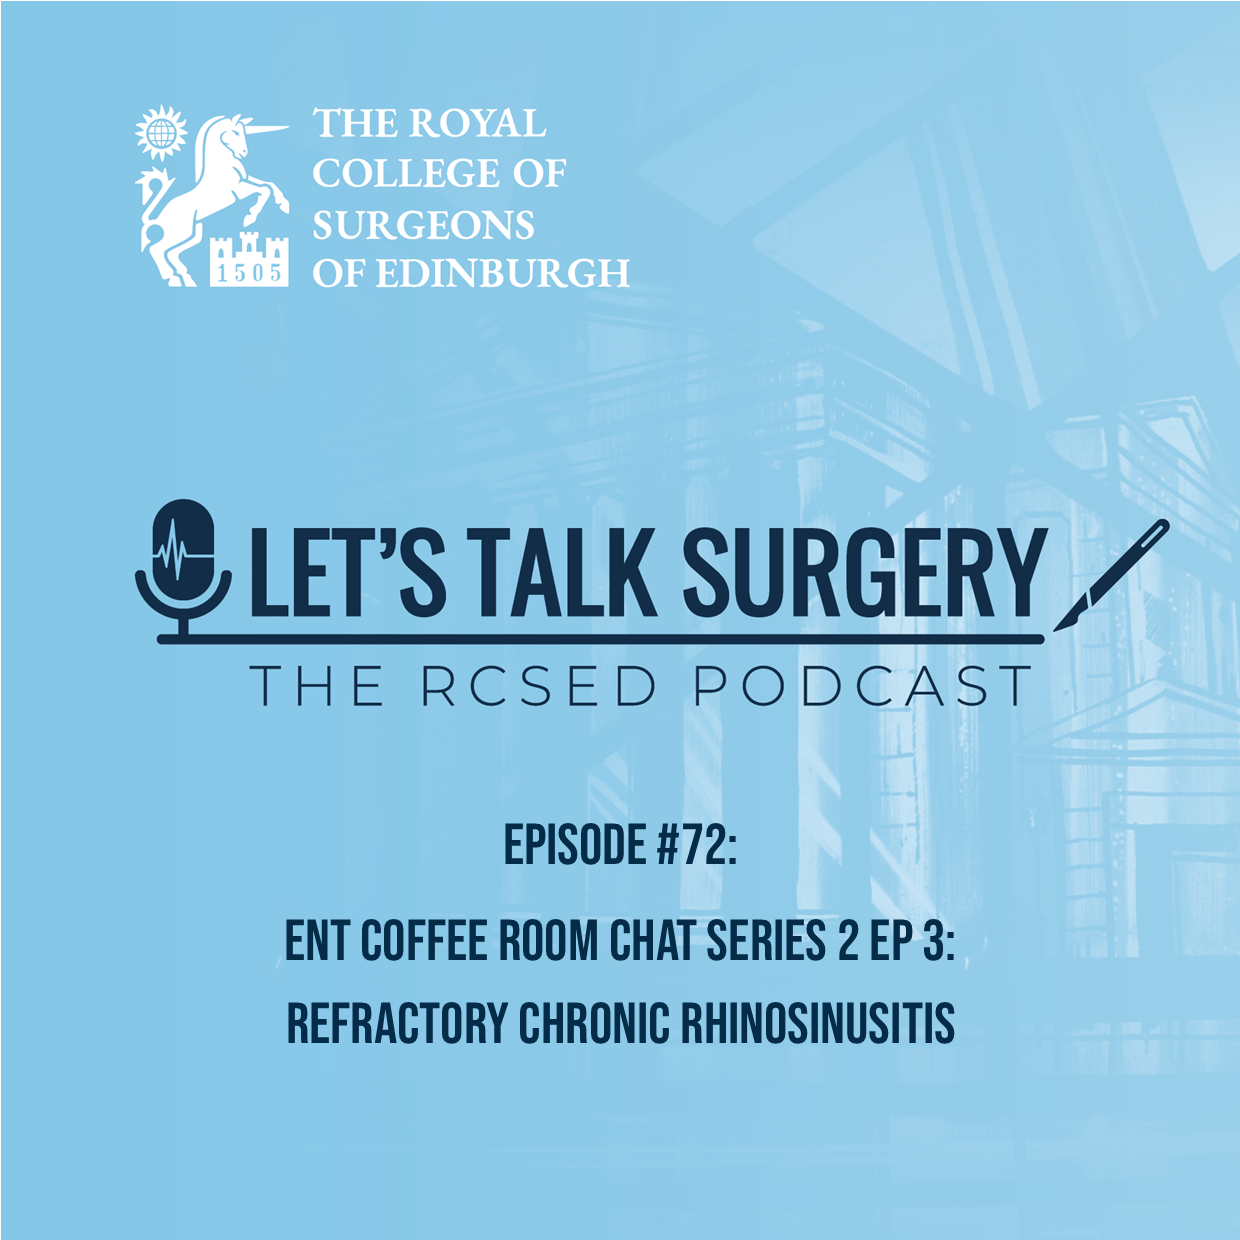 ENT Coffee Room Chat Series 2: Ep 3 - Refractory Chronic Rhinosinusitis